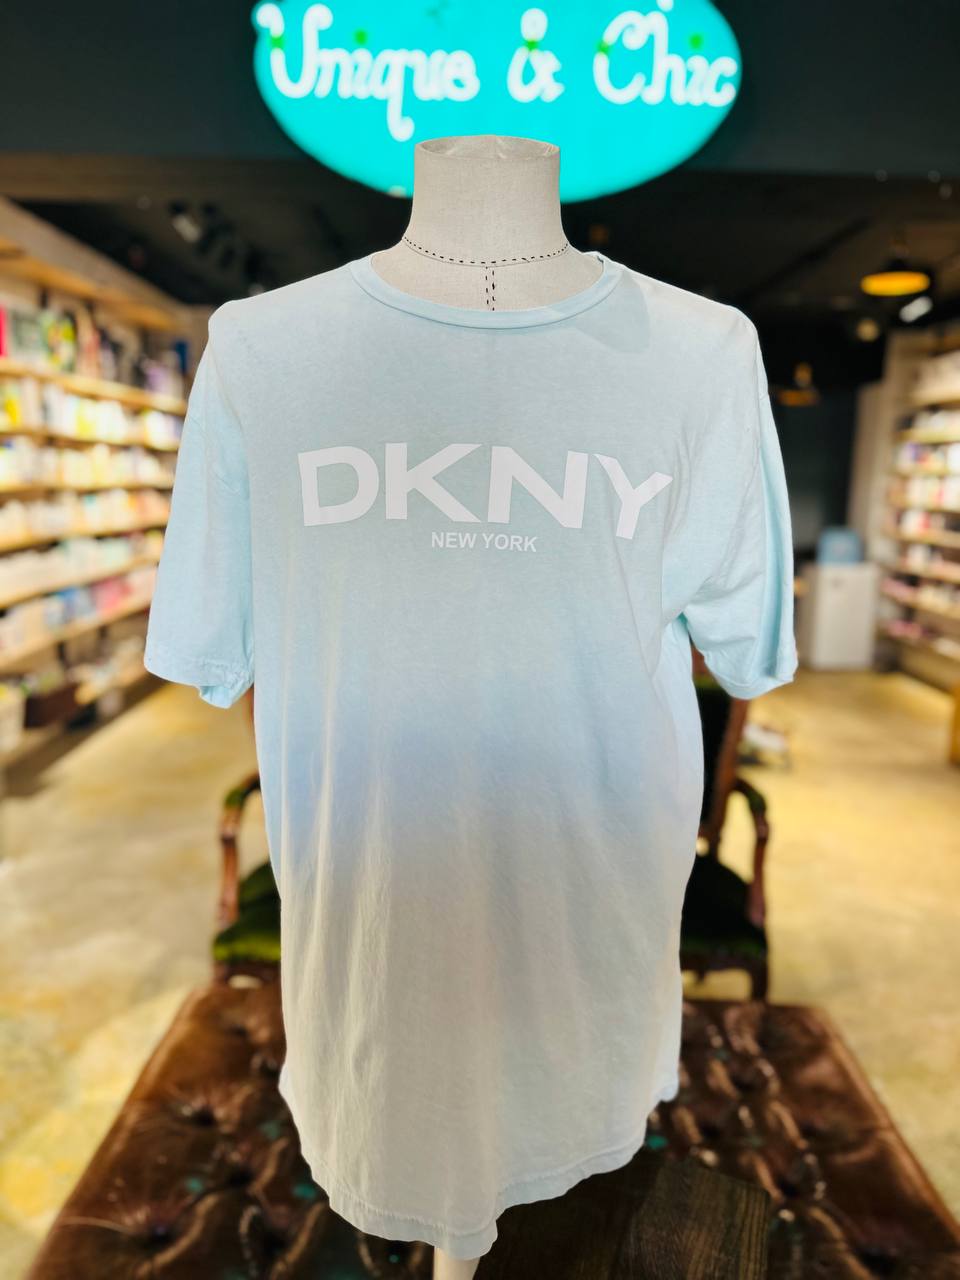 Dkny shirt